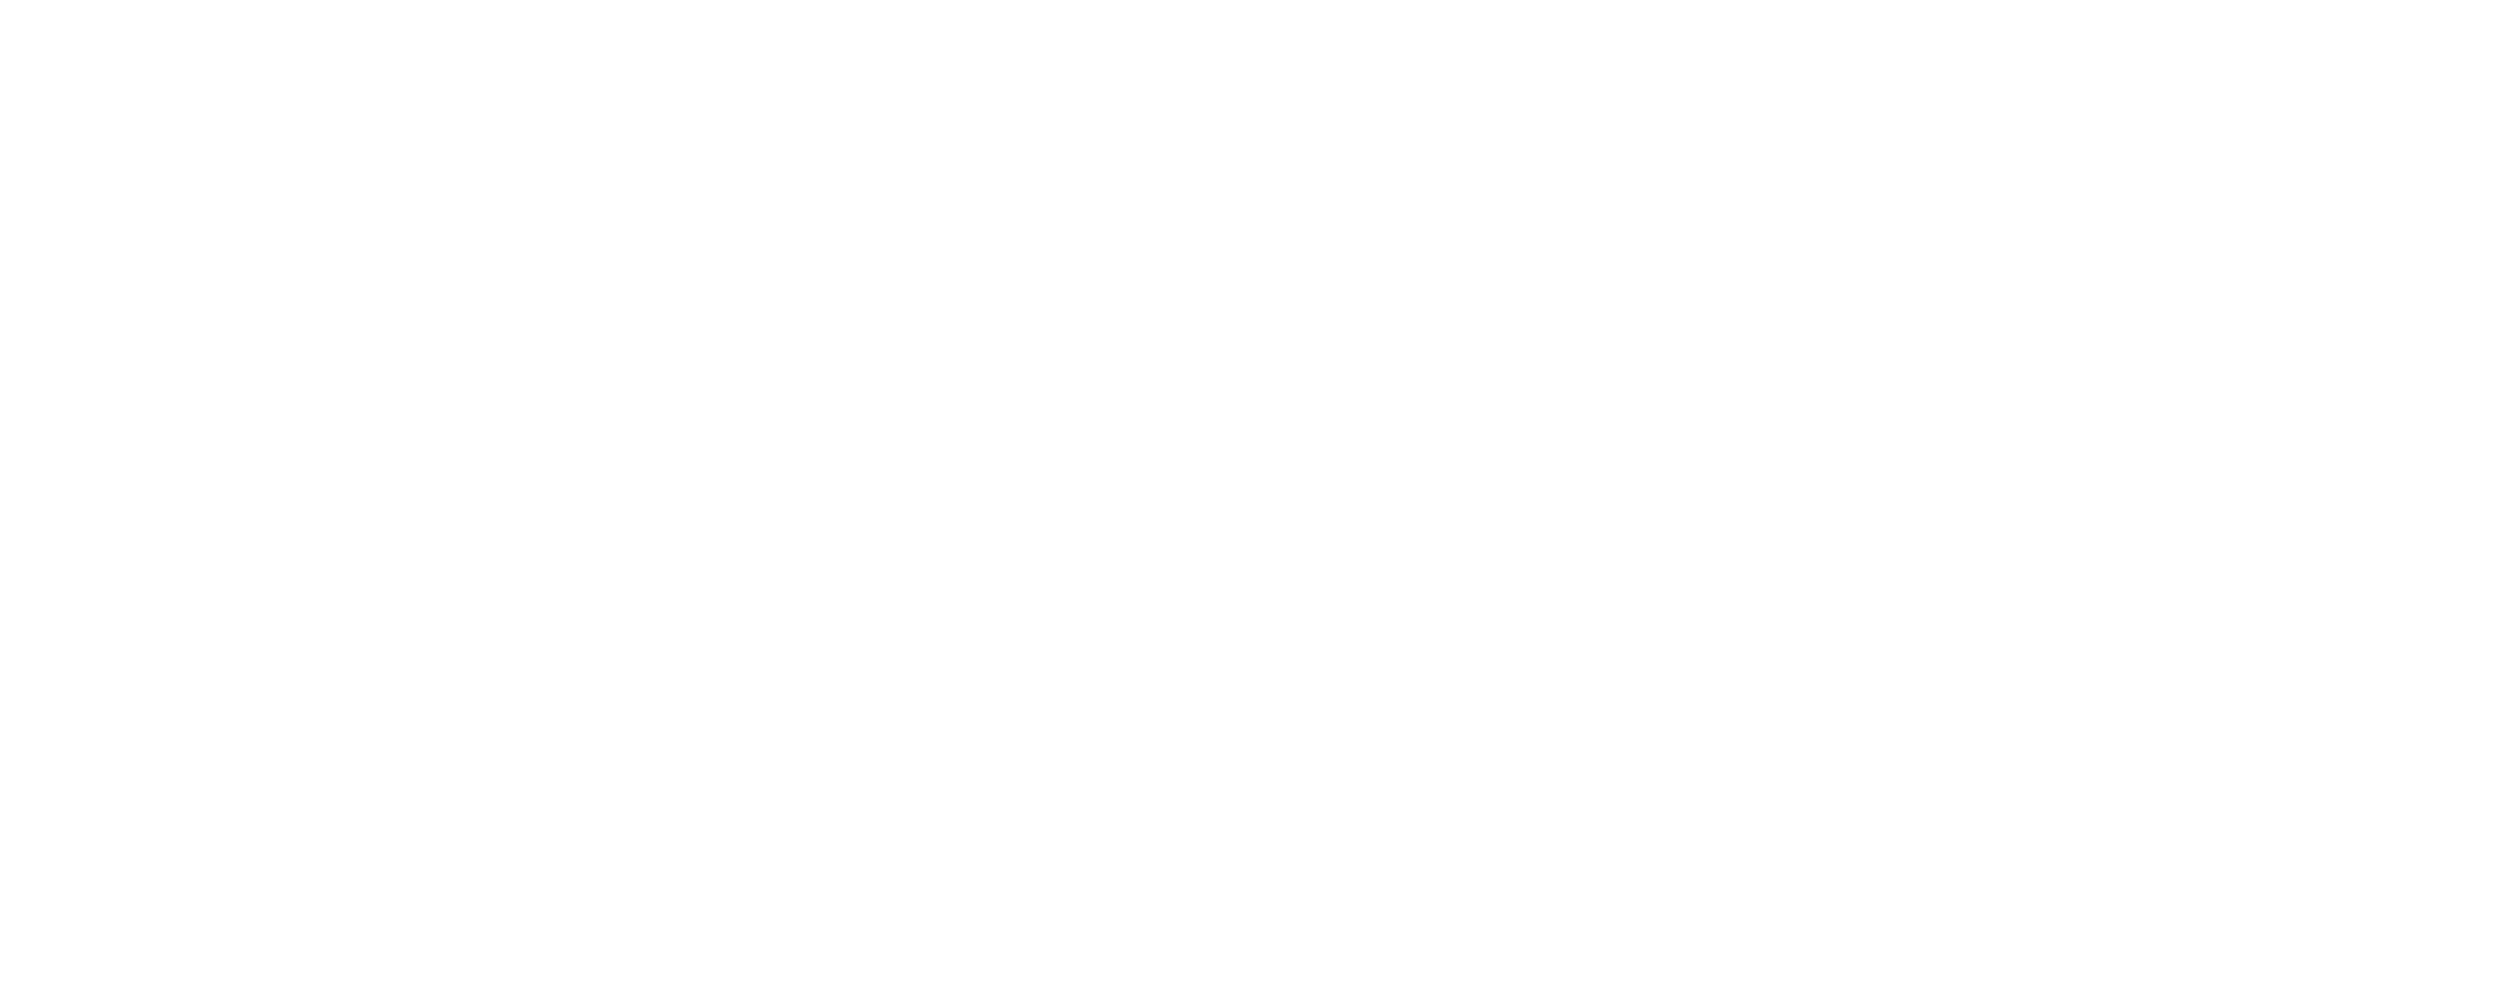 Blossom Ridge logo